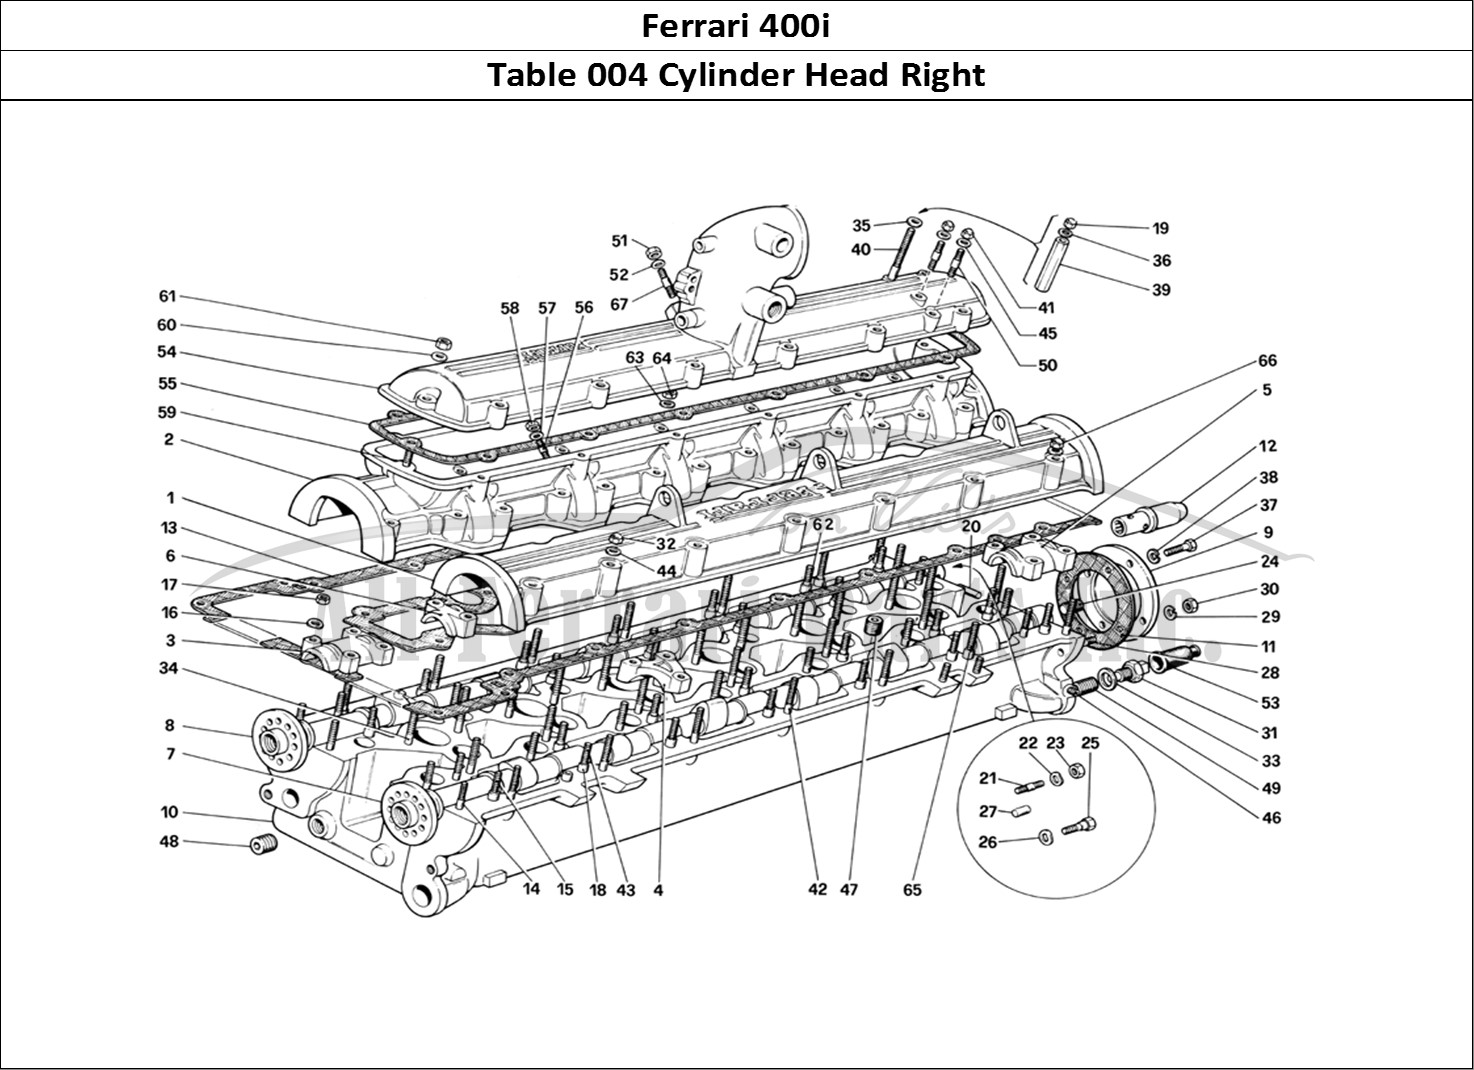 Ferrari Parts Ferrari 400i (1983 Mechanical) Page 004 Cylinder Head (Right)